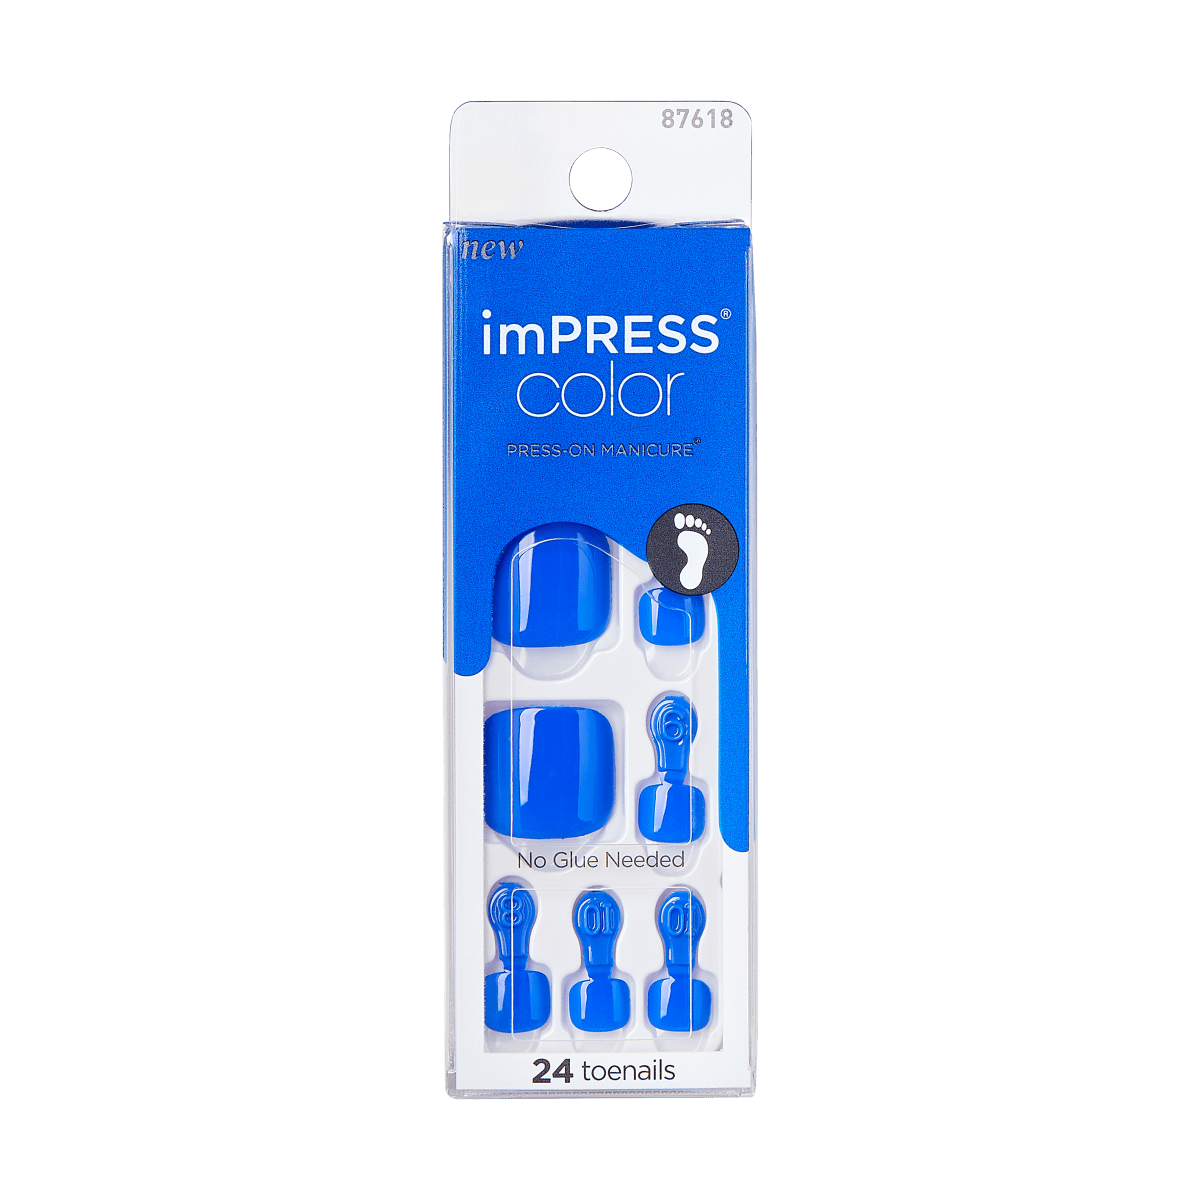 imPRESS Color Press-on-Pedicure - Summertime